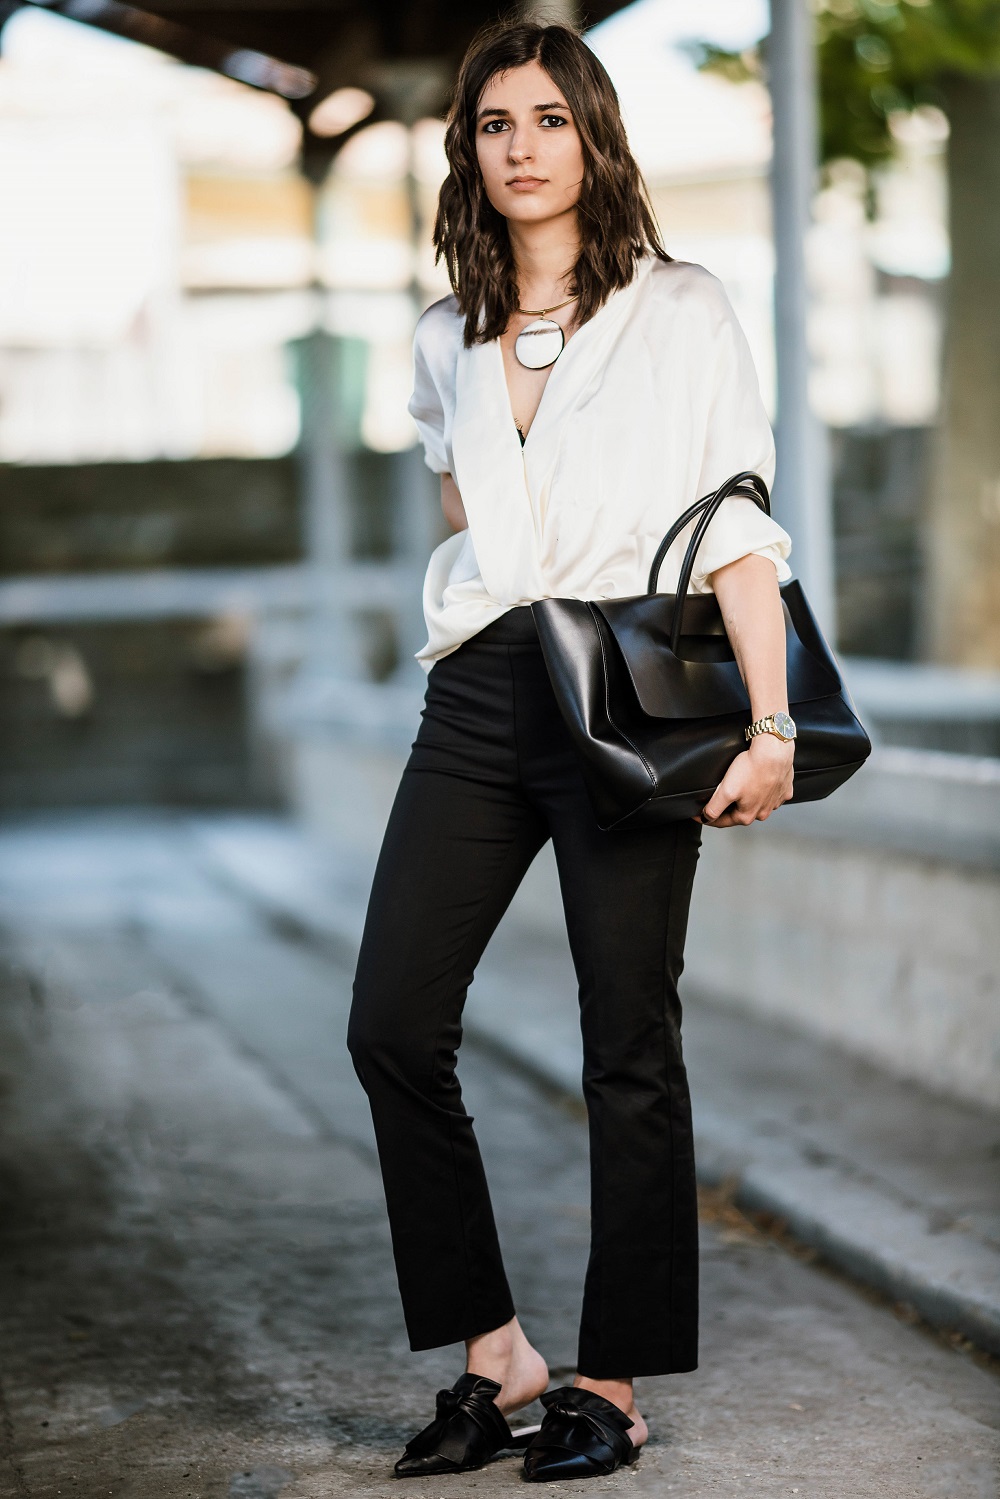 Silk and leather | Aria Di Bari | Bloglovin’